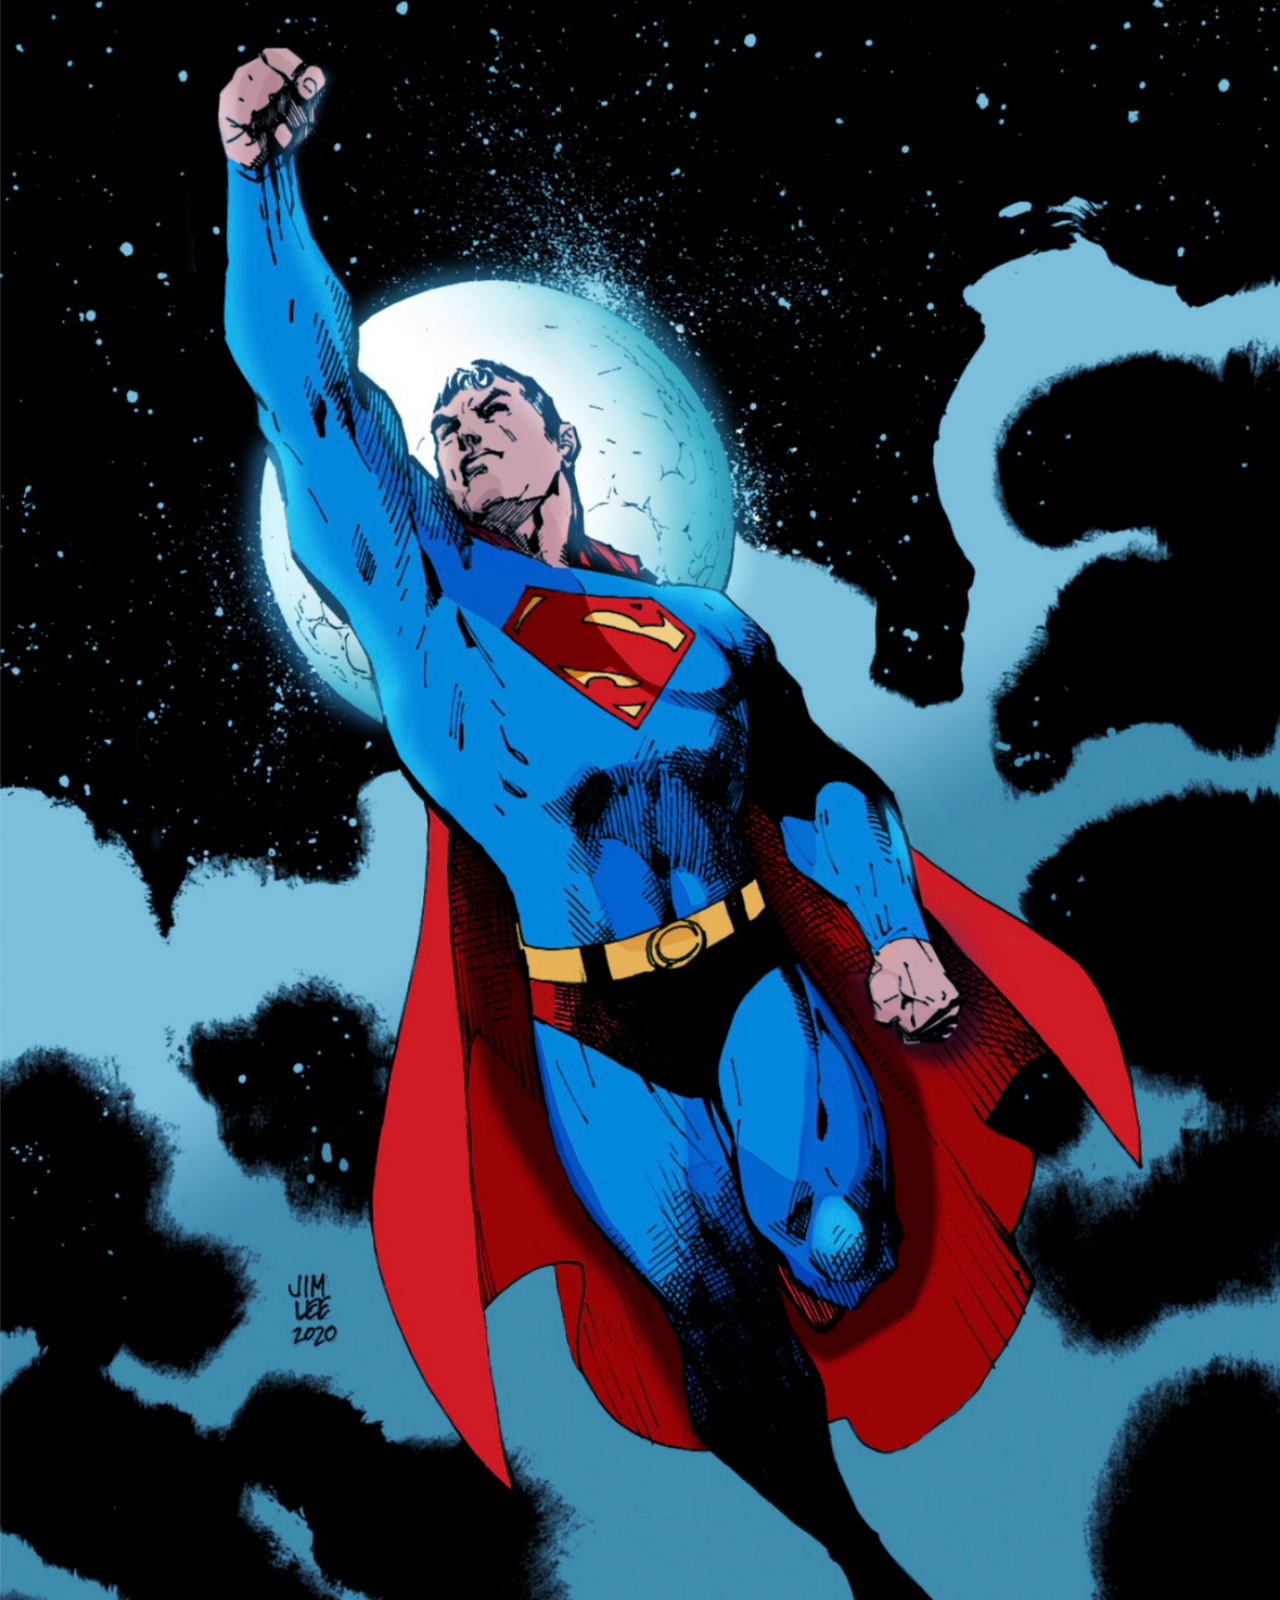 Jim Lee Superman Coloured by Studioart12345 on DeviantArt